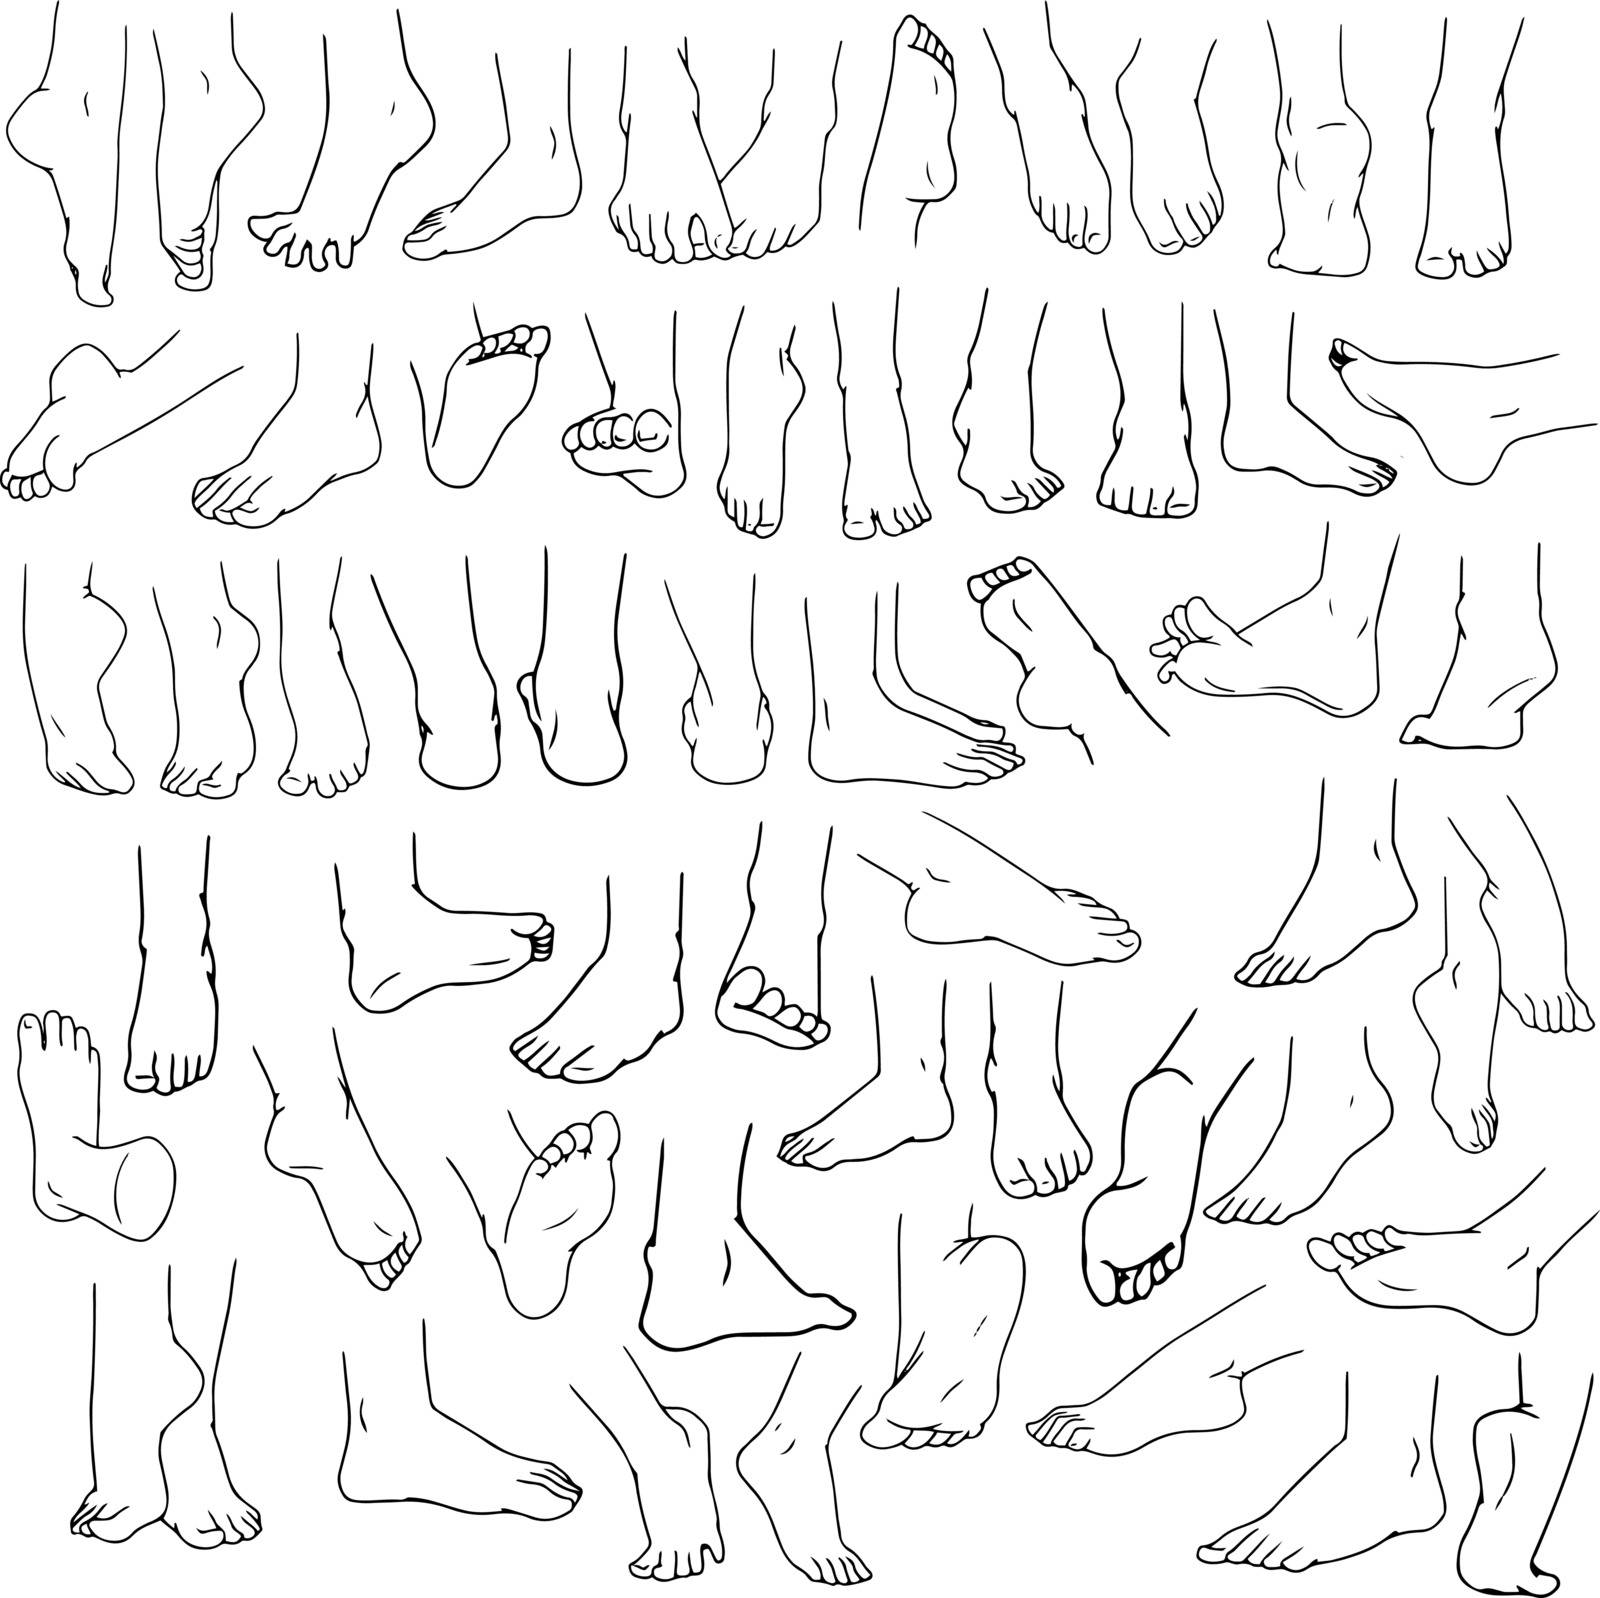 Woman Man Feet Pack Lineart 3 by LironPeer